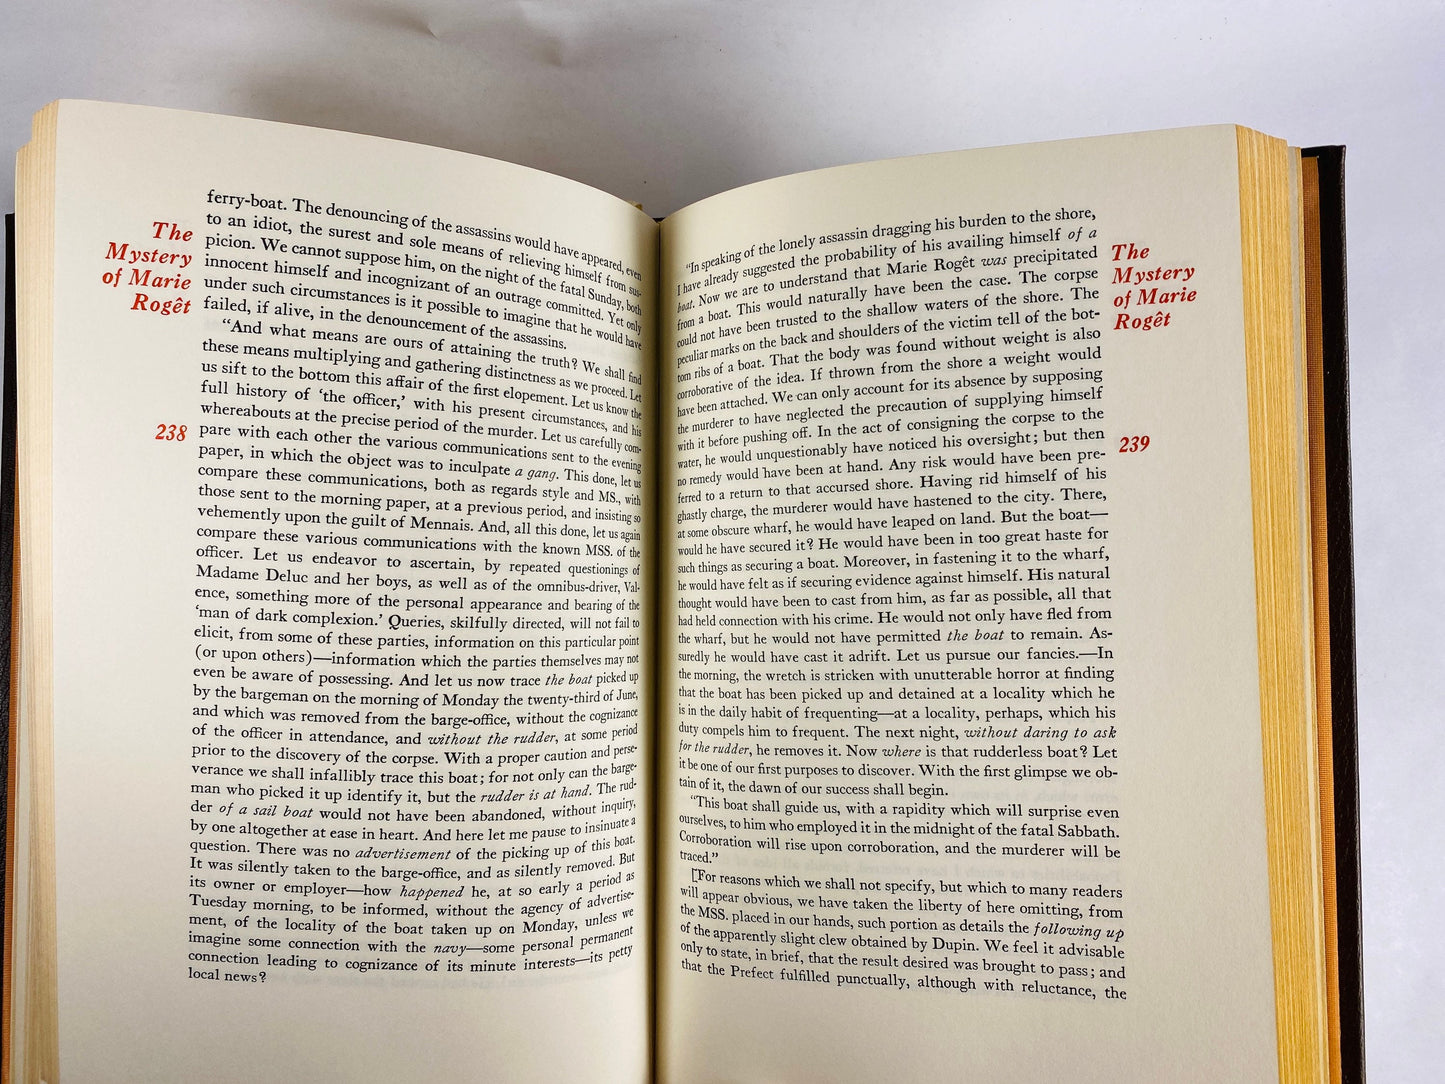 Edgar Allan Poe Easton Press vintage poetry book circa 1975 Beautiful brown leather binding with gold leaf embossing